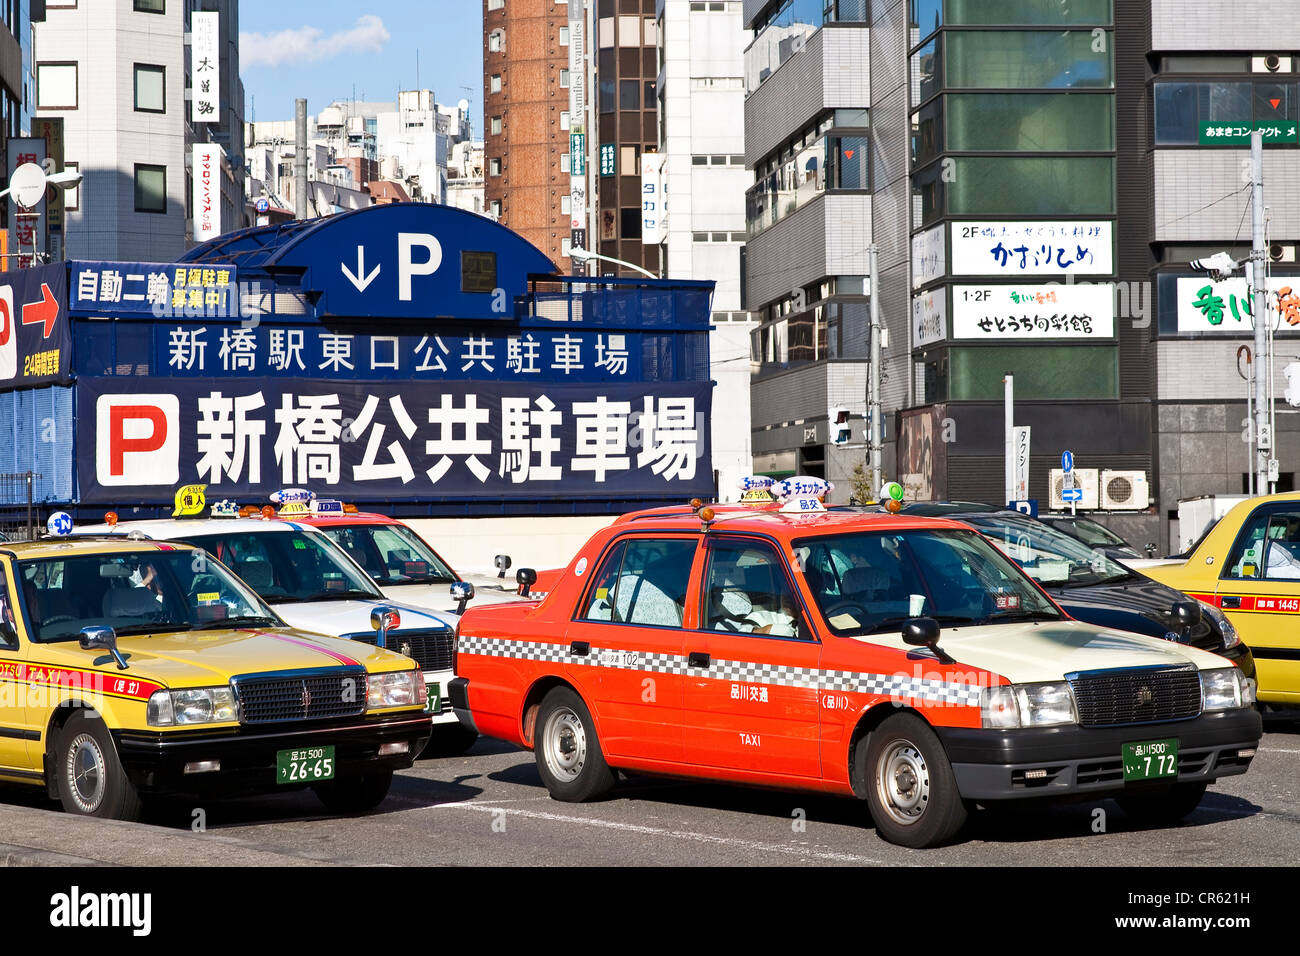 Japan, Insel Honshu, Tokio, Minato, Shimbashi Bahnhof taxis Bahnhof Stockfoto